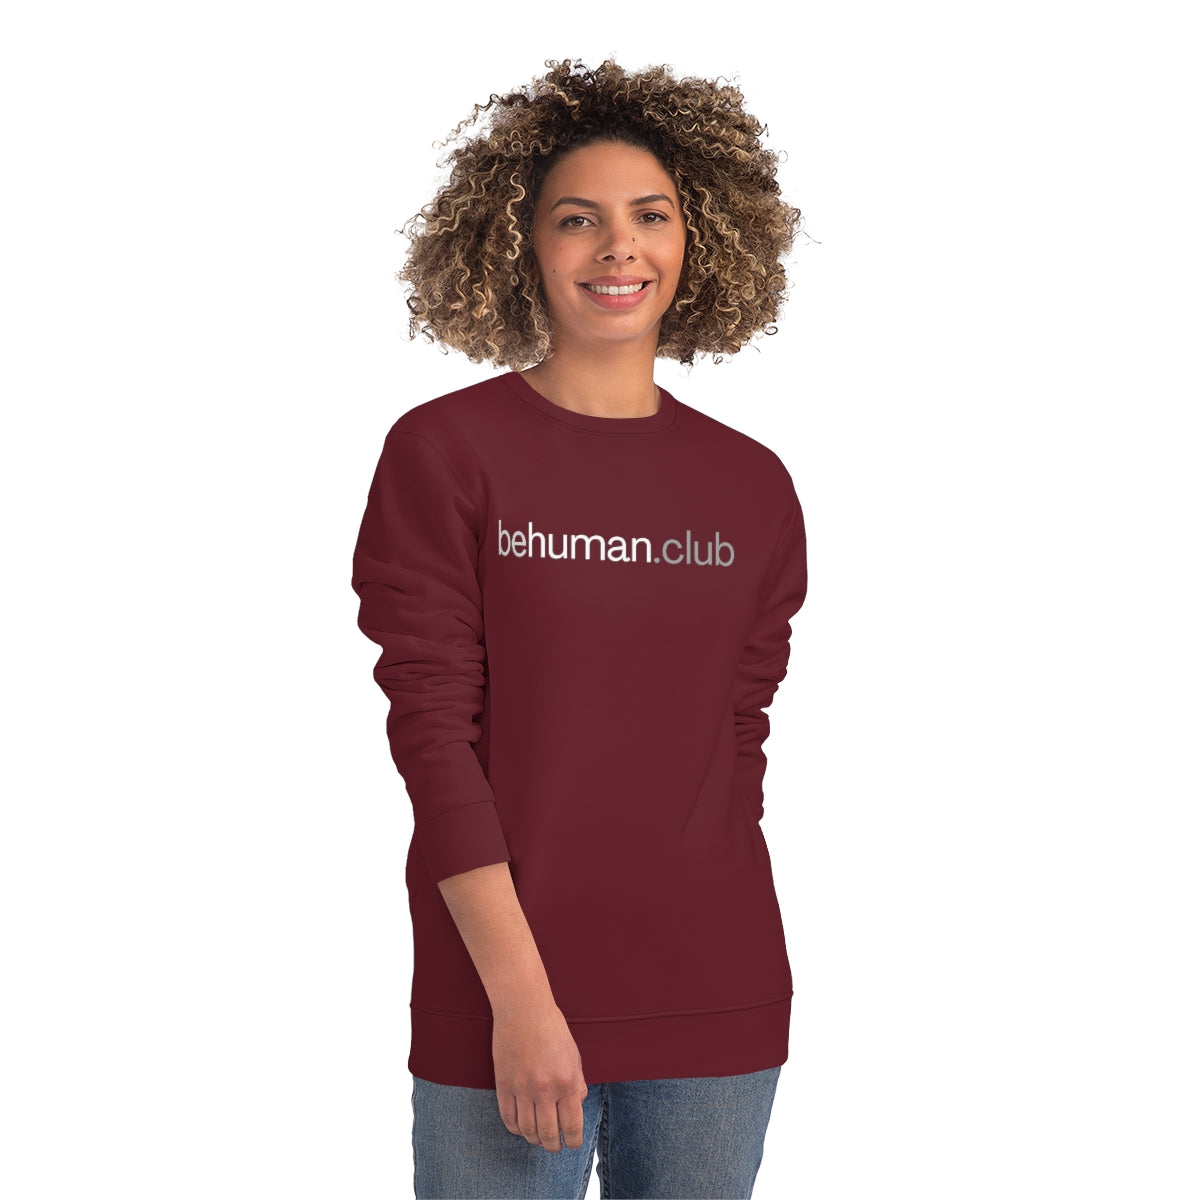 behuman.club - Unisex Changer Sweatshirt